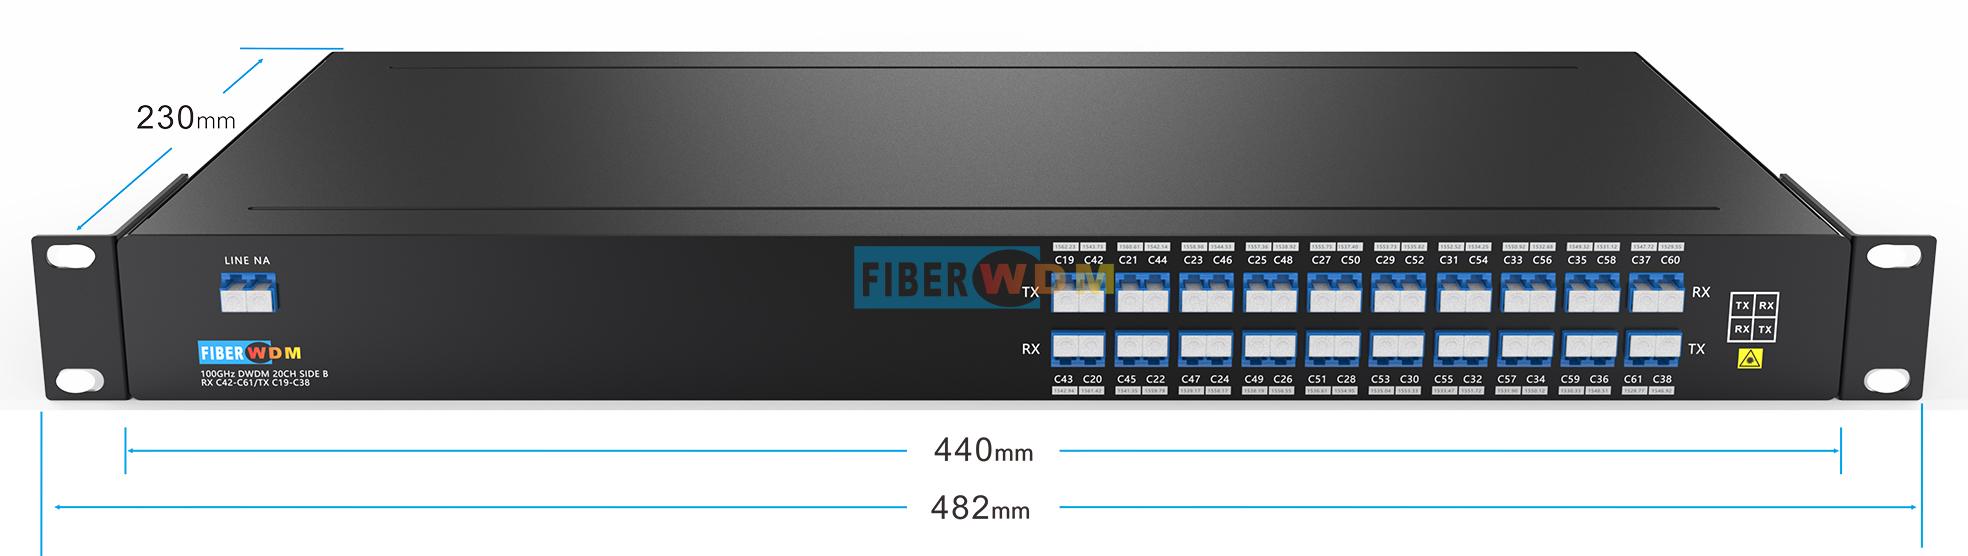 Rack 1U de fibra única DWDM MUX y DEMUX de 19” pulgadas